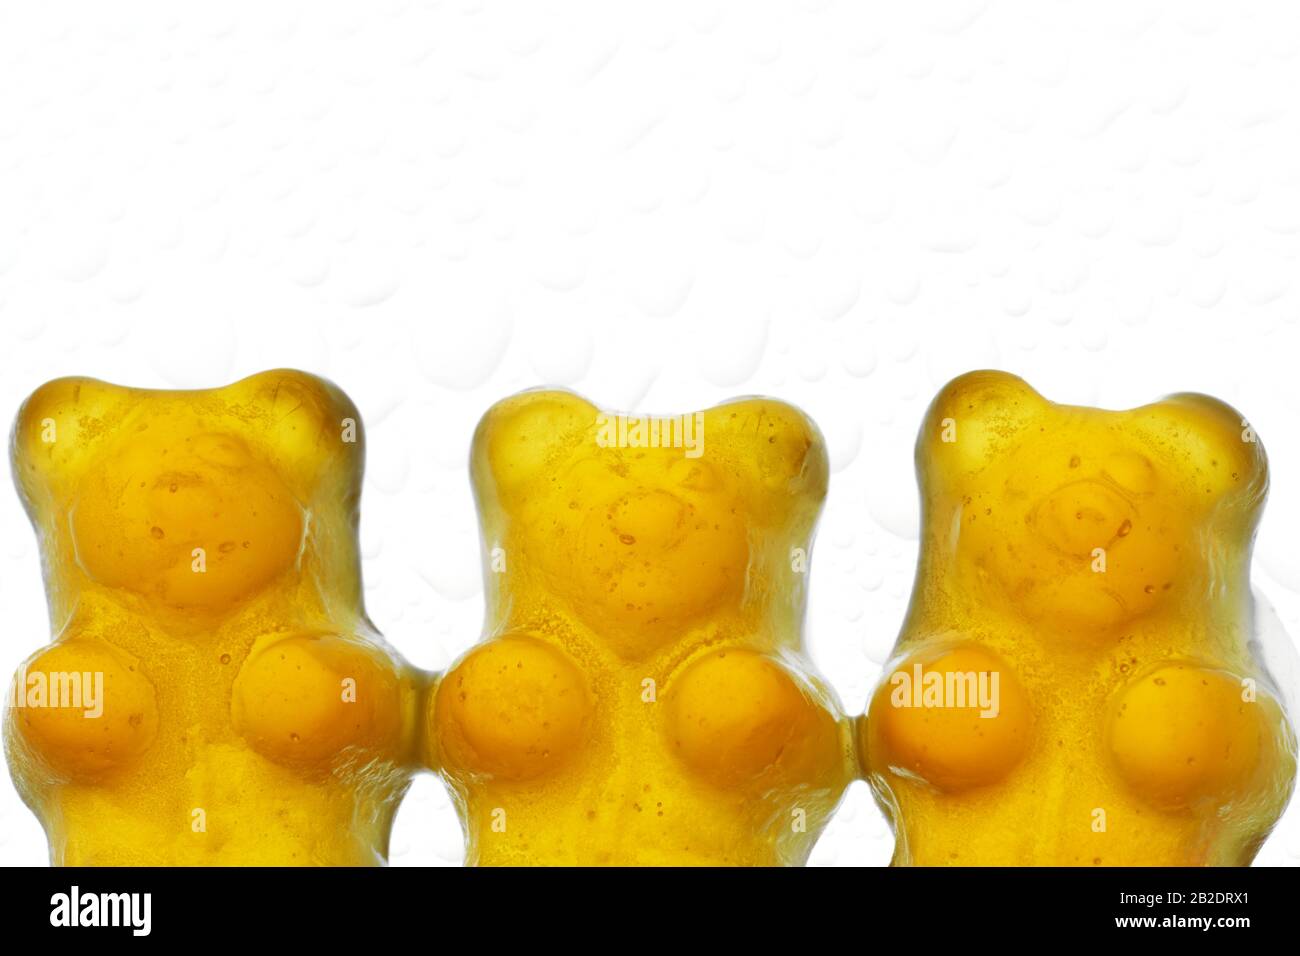 Orange jelly bear candy aligned on a white background Stock Photo